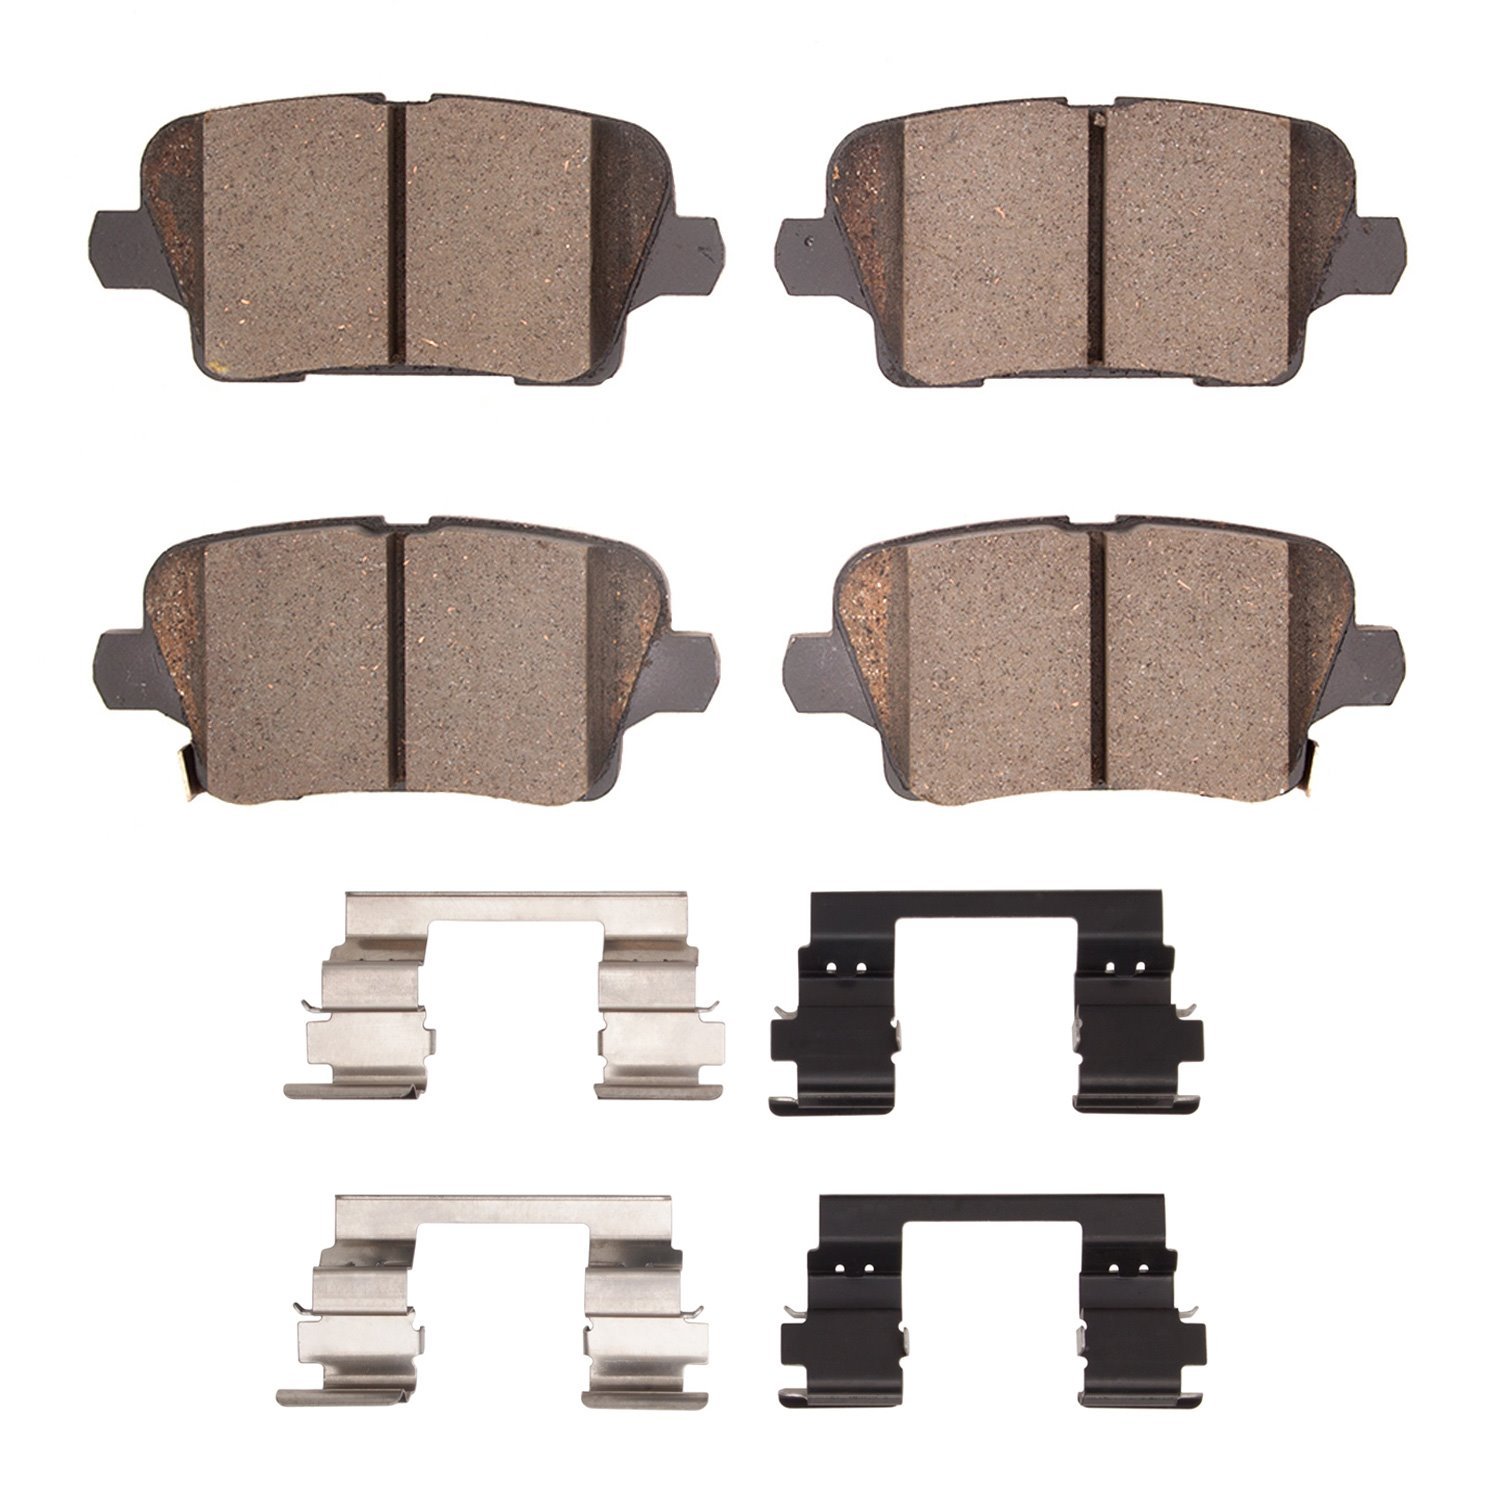 1552-2189-01 5000 Advanced Low-Metallic Brake Pads & Hardware Kit, Fits Select GM, Position: Rear